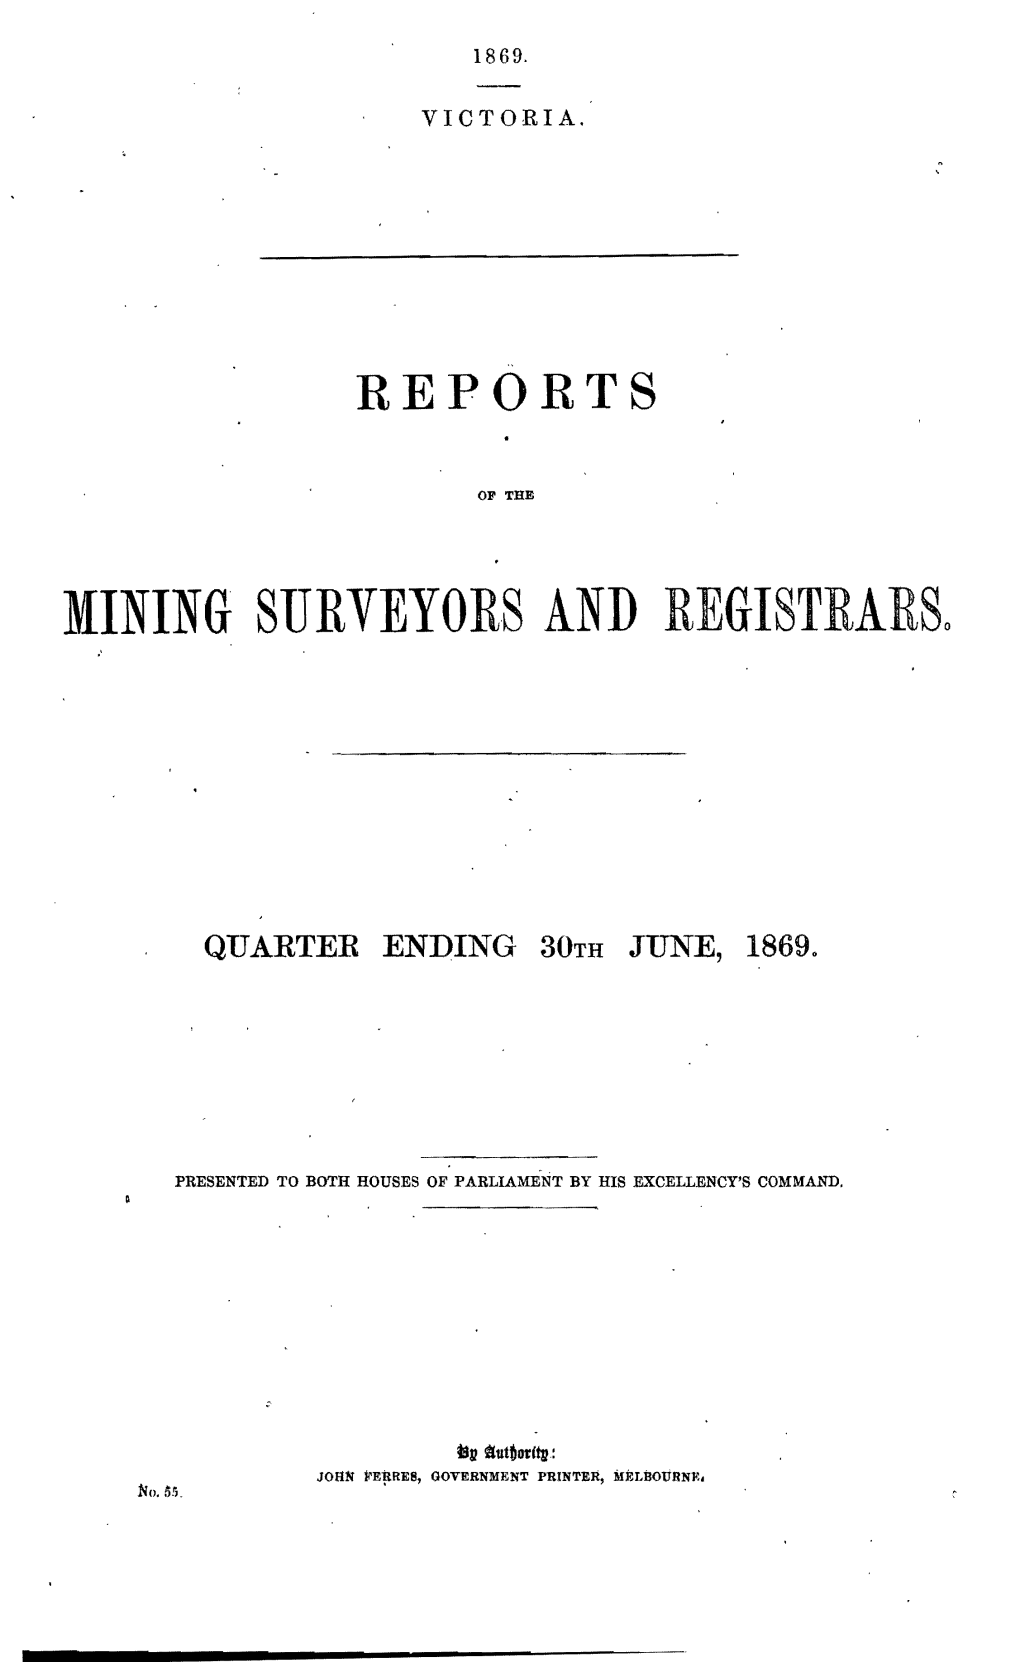 Mining Surveyors and Registrarso